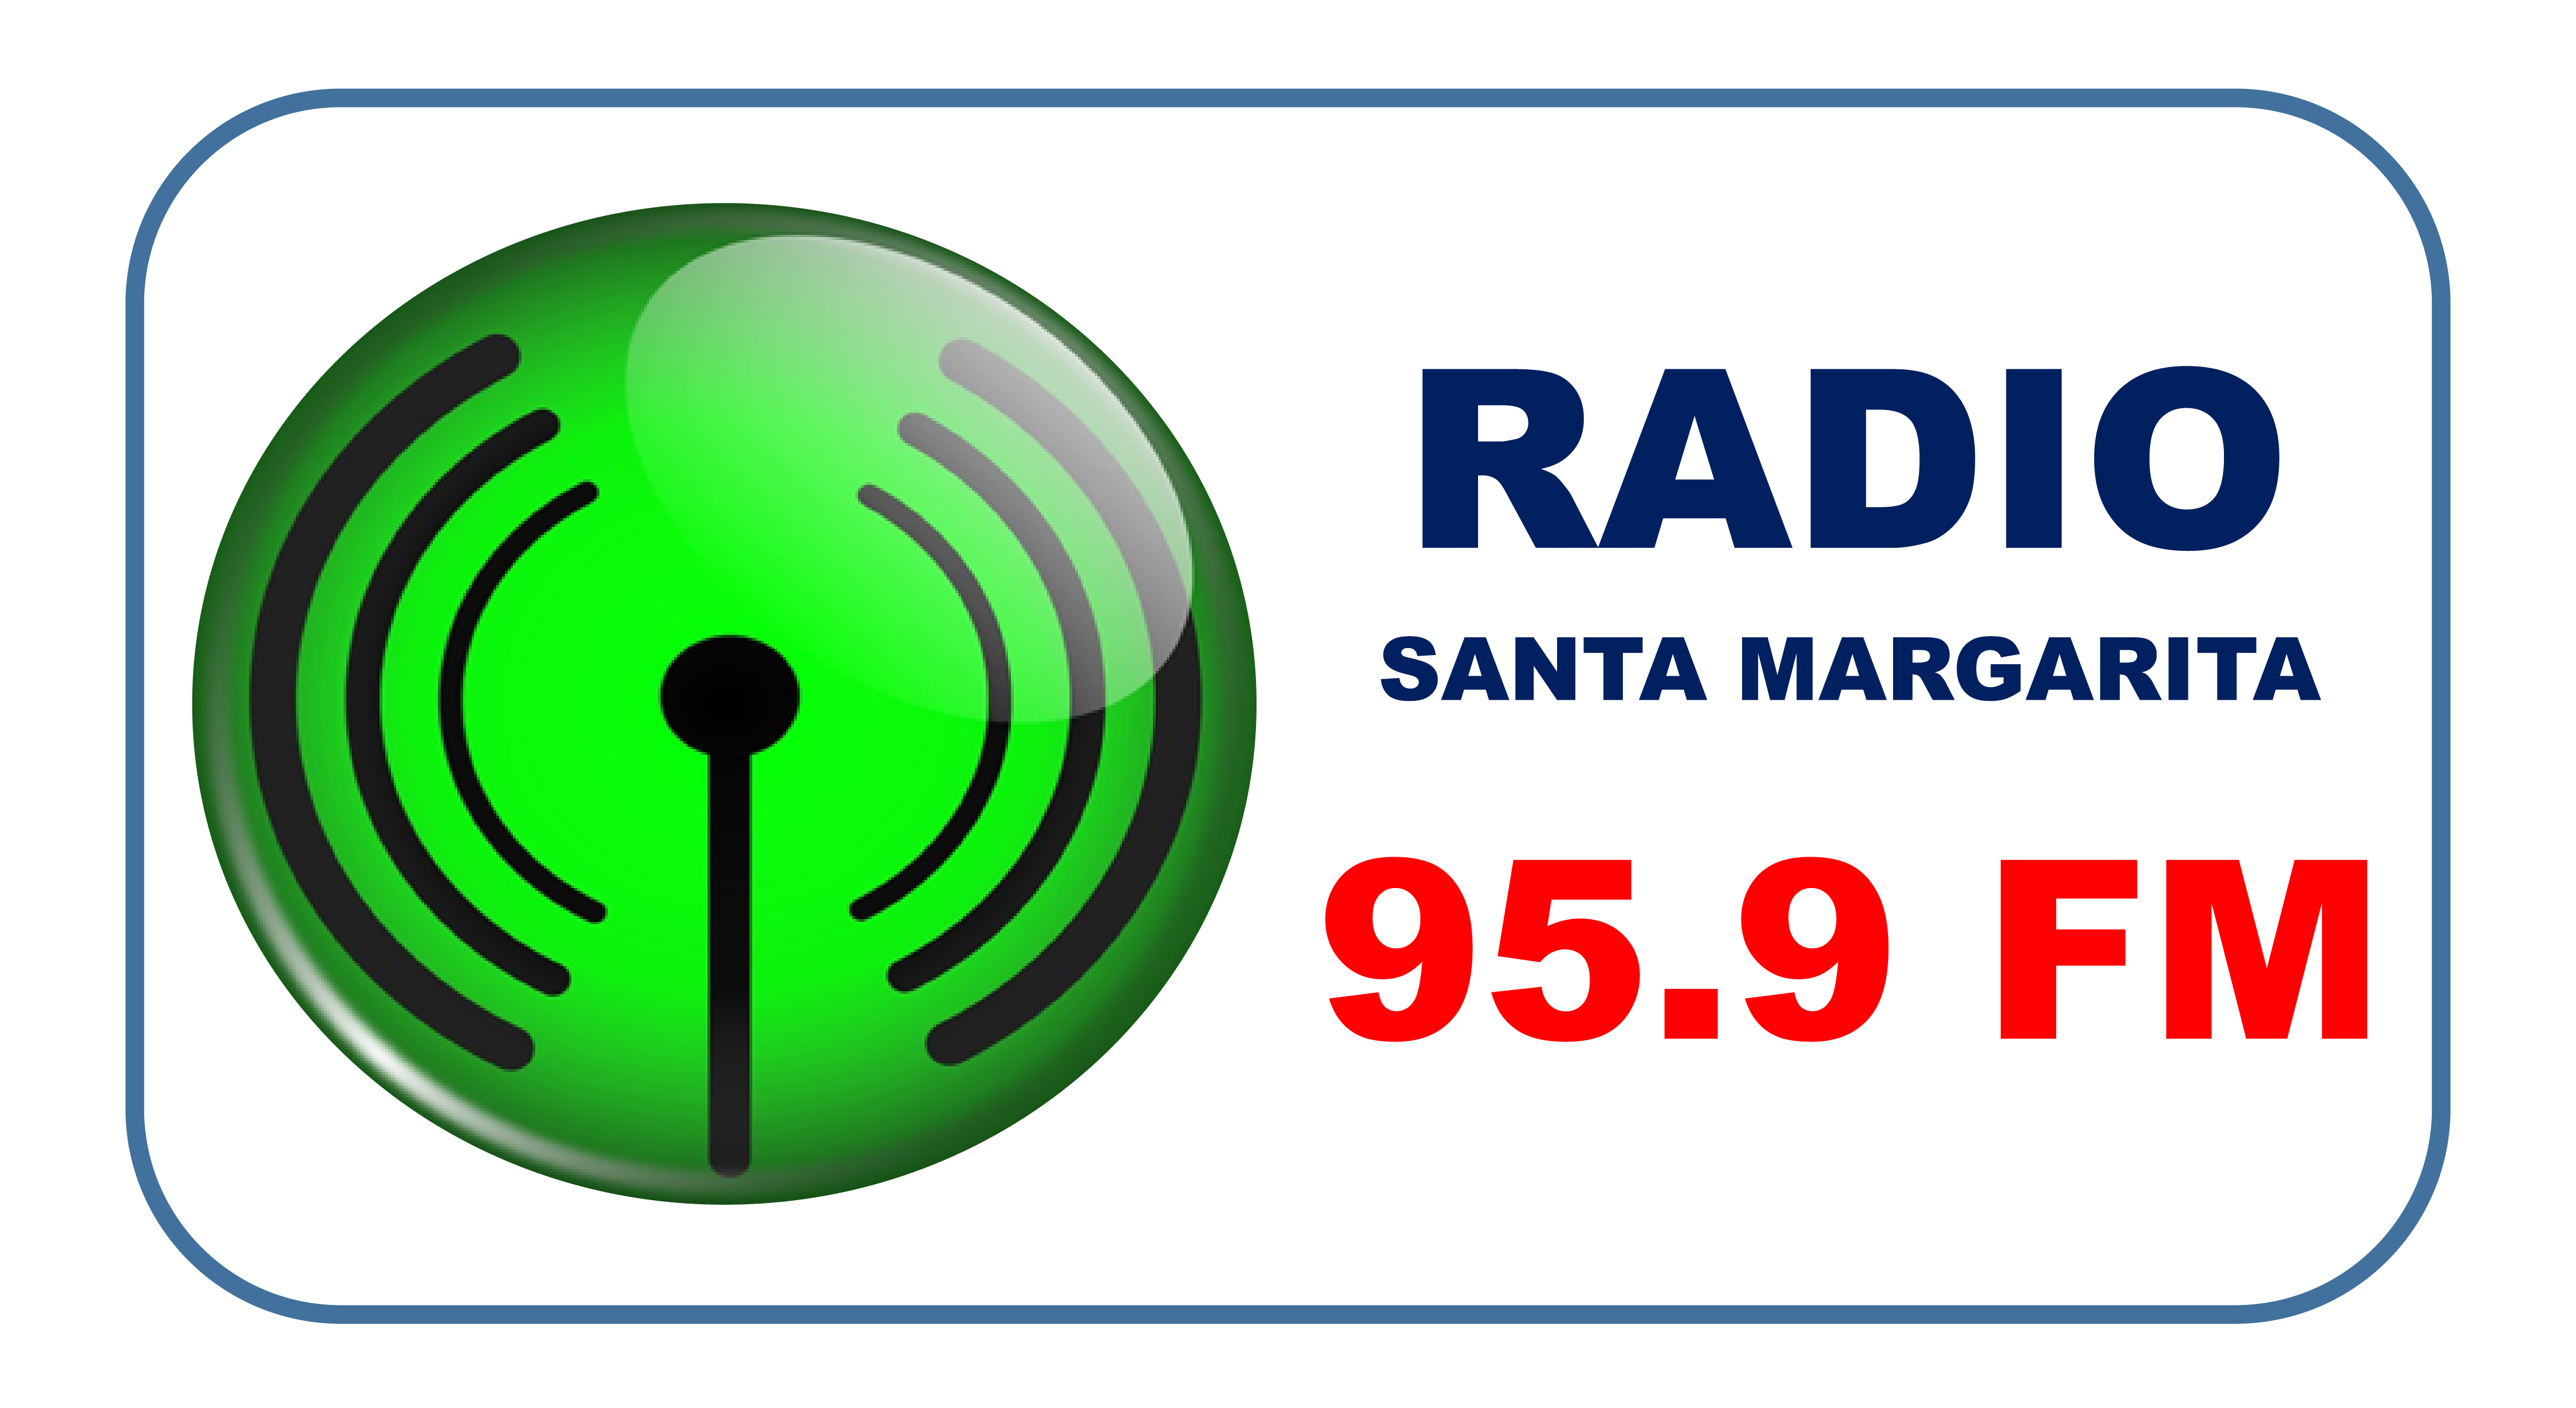 Radio Santa Margarita 95.9 FM